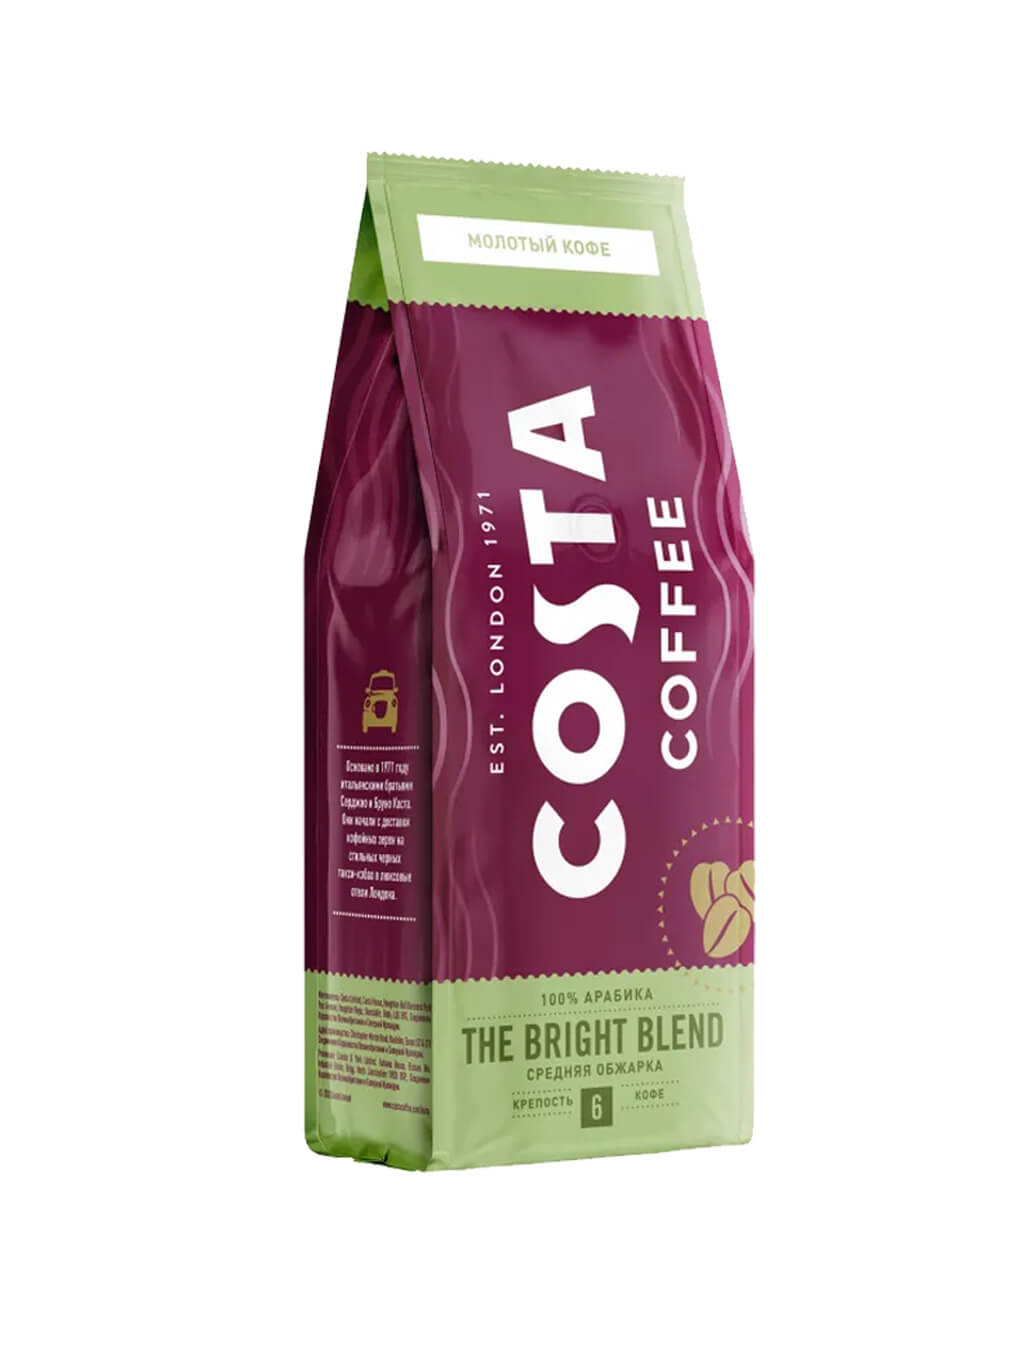 Молотый кофе 200 г. Costa Coffee Bright Blend 200. Кофе Коста Брайт Бленд молотый, 200 г. 200г кофе Costa Coffee Colombian мол. Коста кофе Signature Blend.